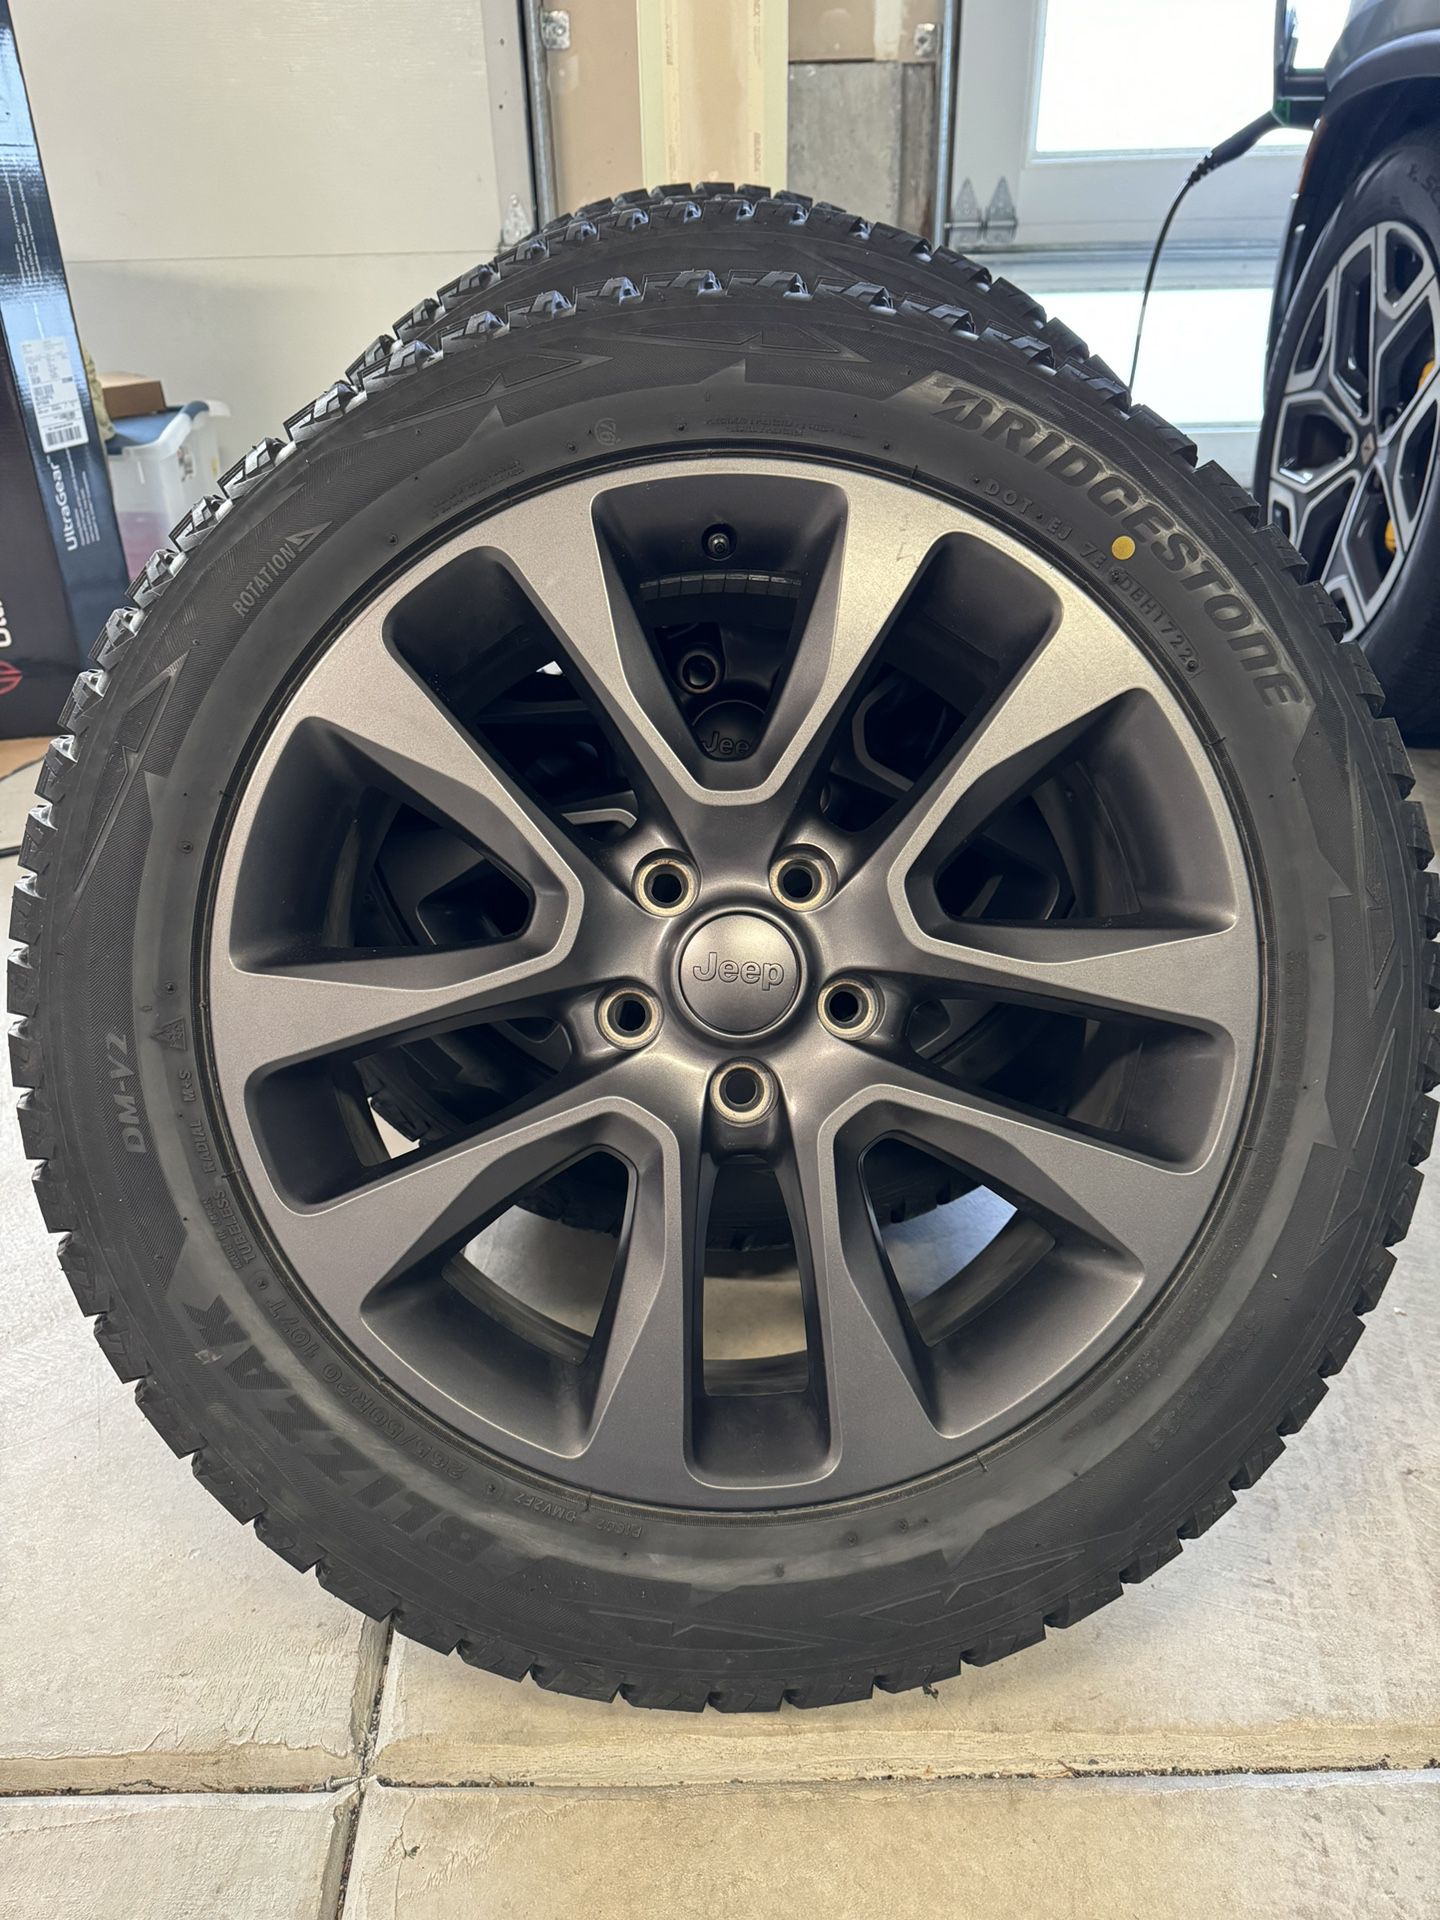 Bridgestone Blizzak Mounted On OEM Jeep Wheels (265/50/20)